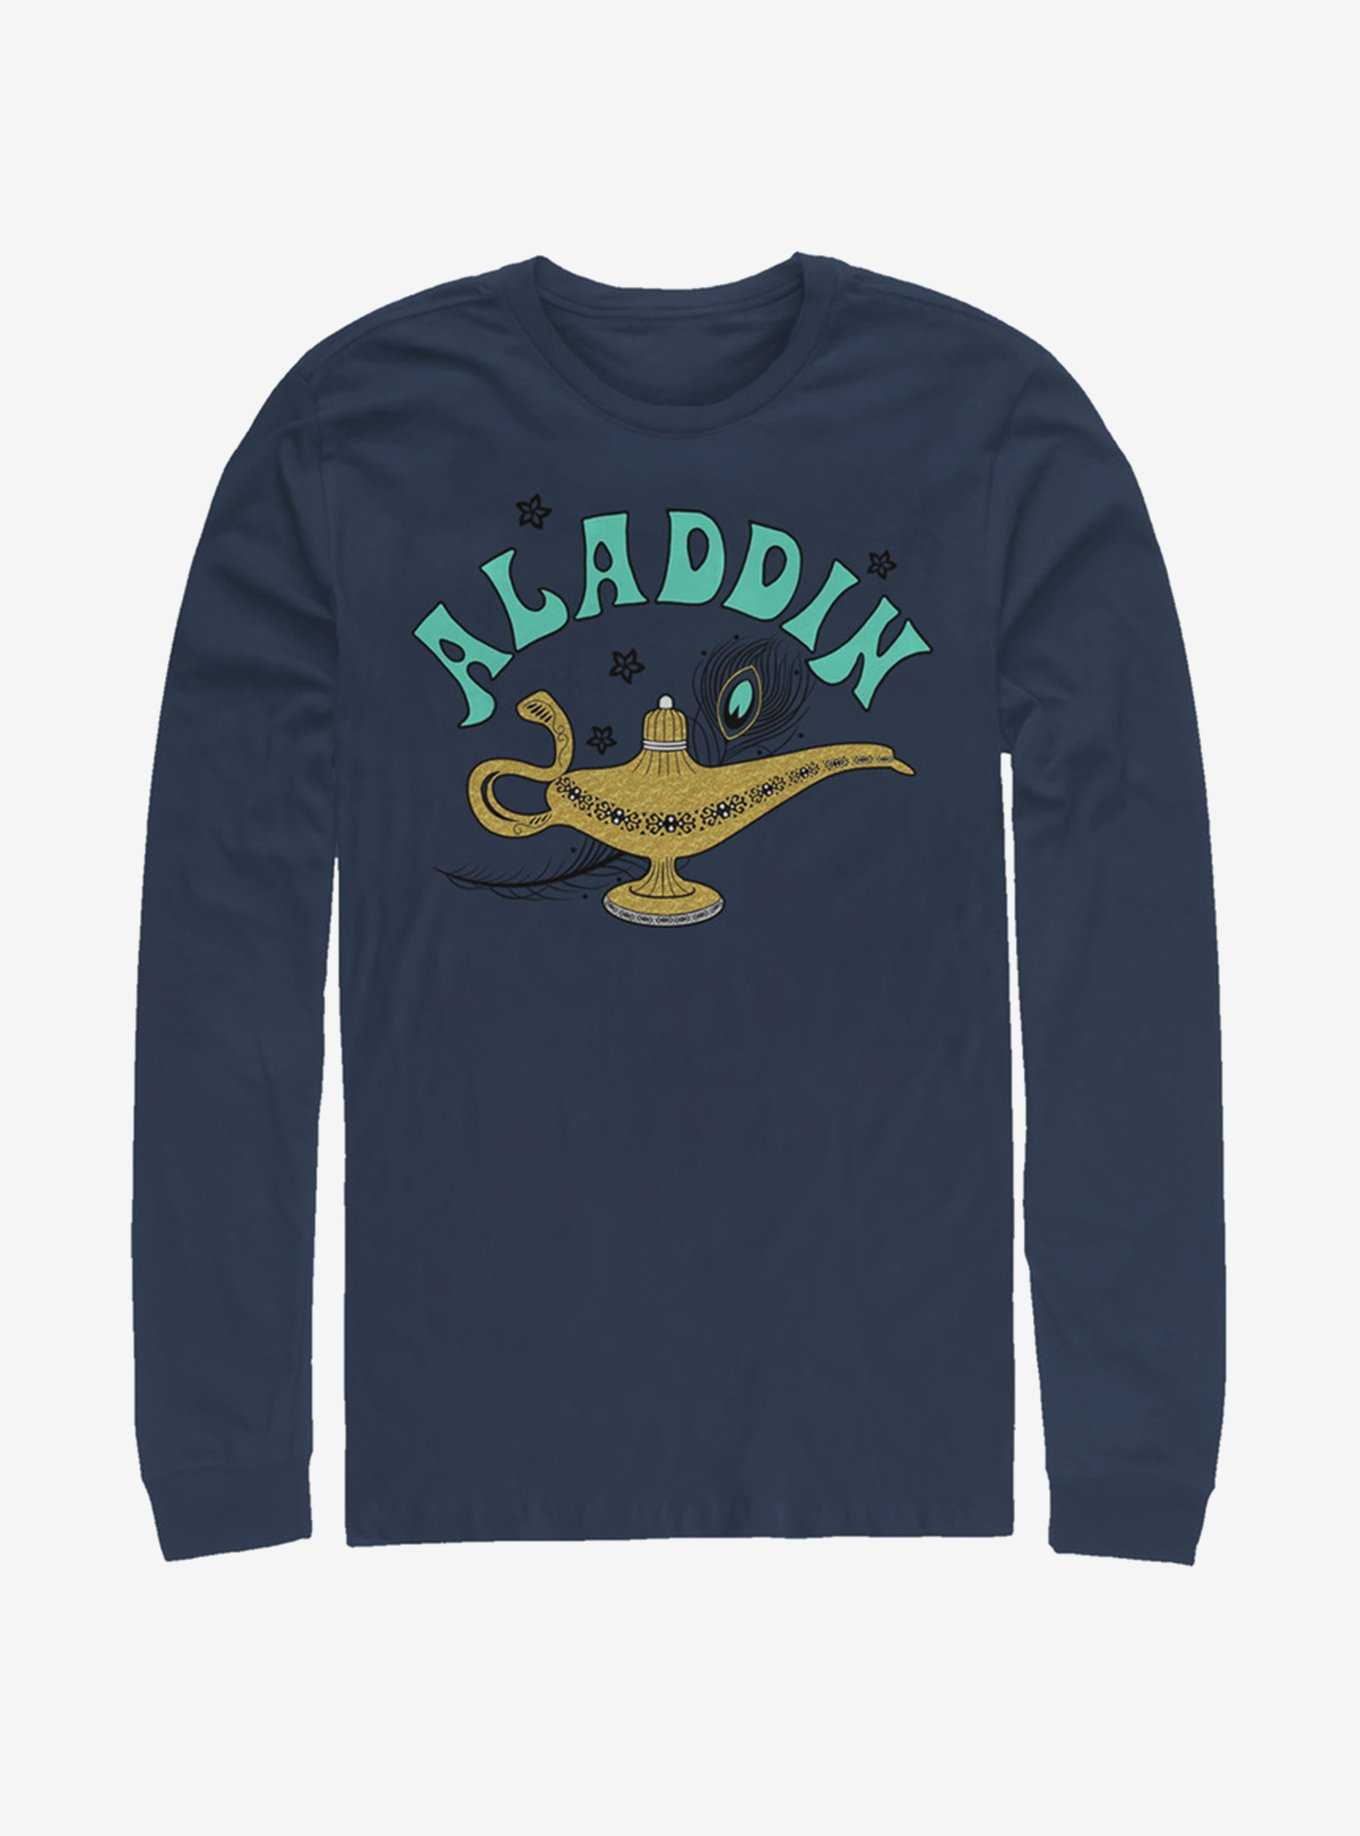 Disney Aladdin 2019 Aladdin Lamp Long-Sleeve T-Shirt , , hi-res